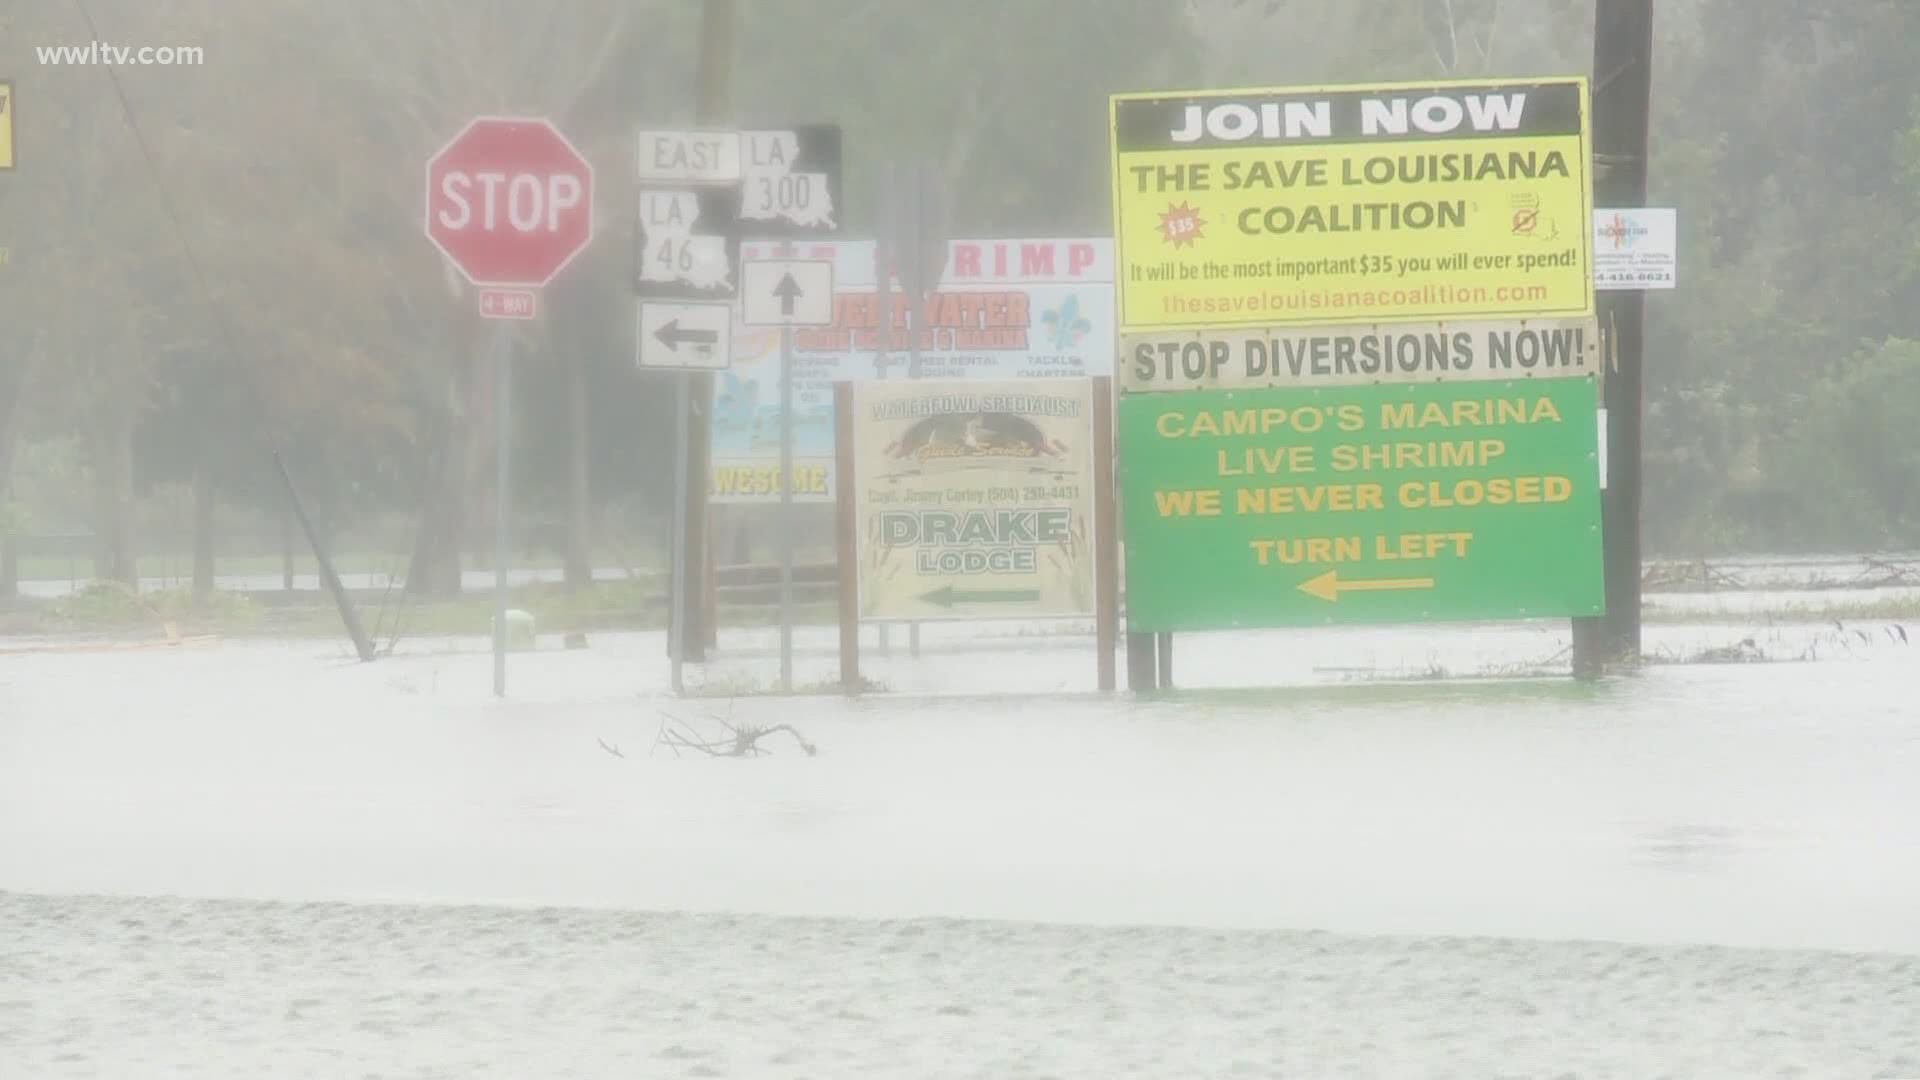 Parish President Guy McInnis said that flooding could continue in St. Bernard Parish through Thursday.